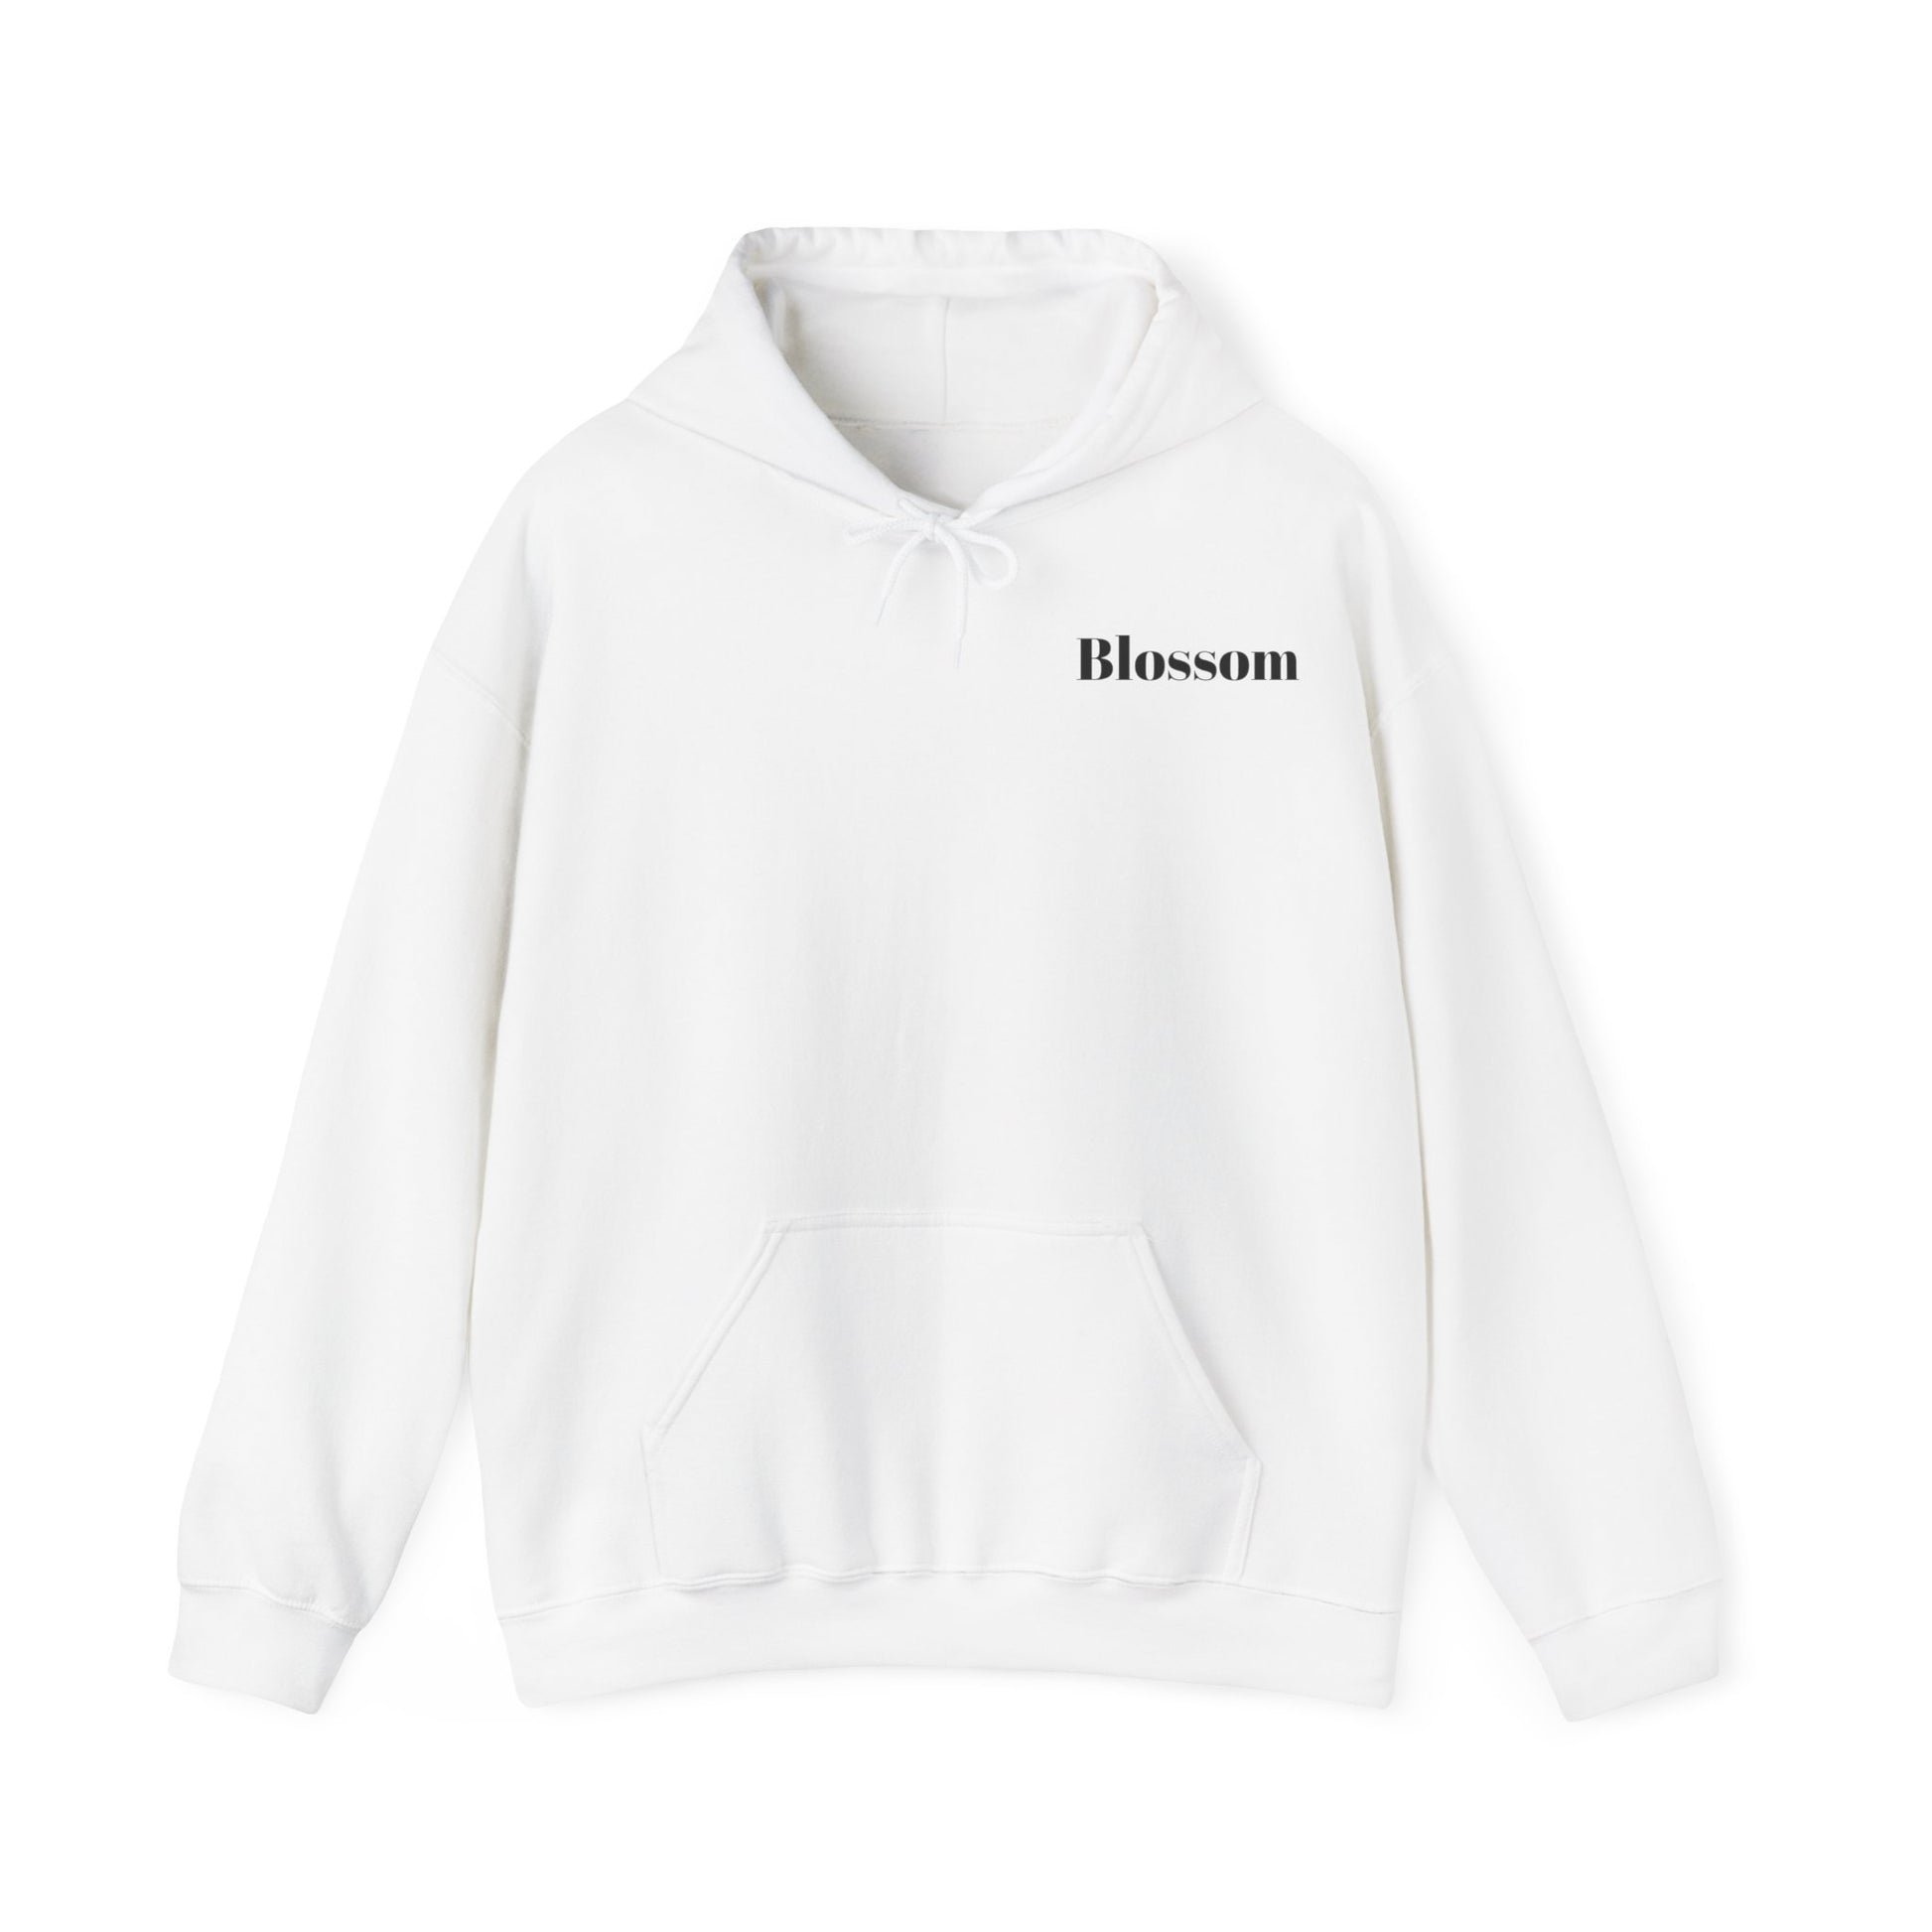 Blossom Unisex Hooded Sweatshirt with Heavy Blend Fabric13